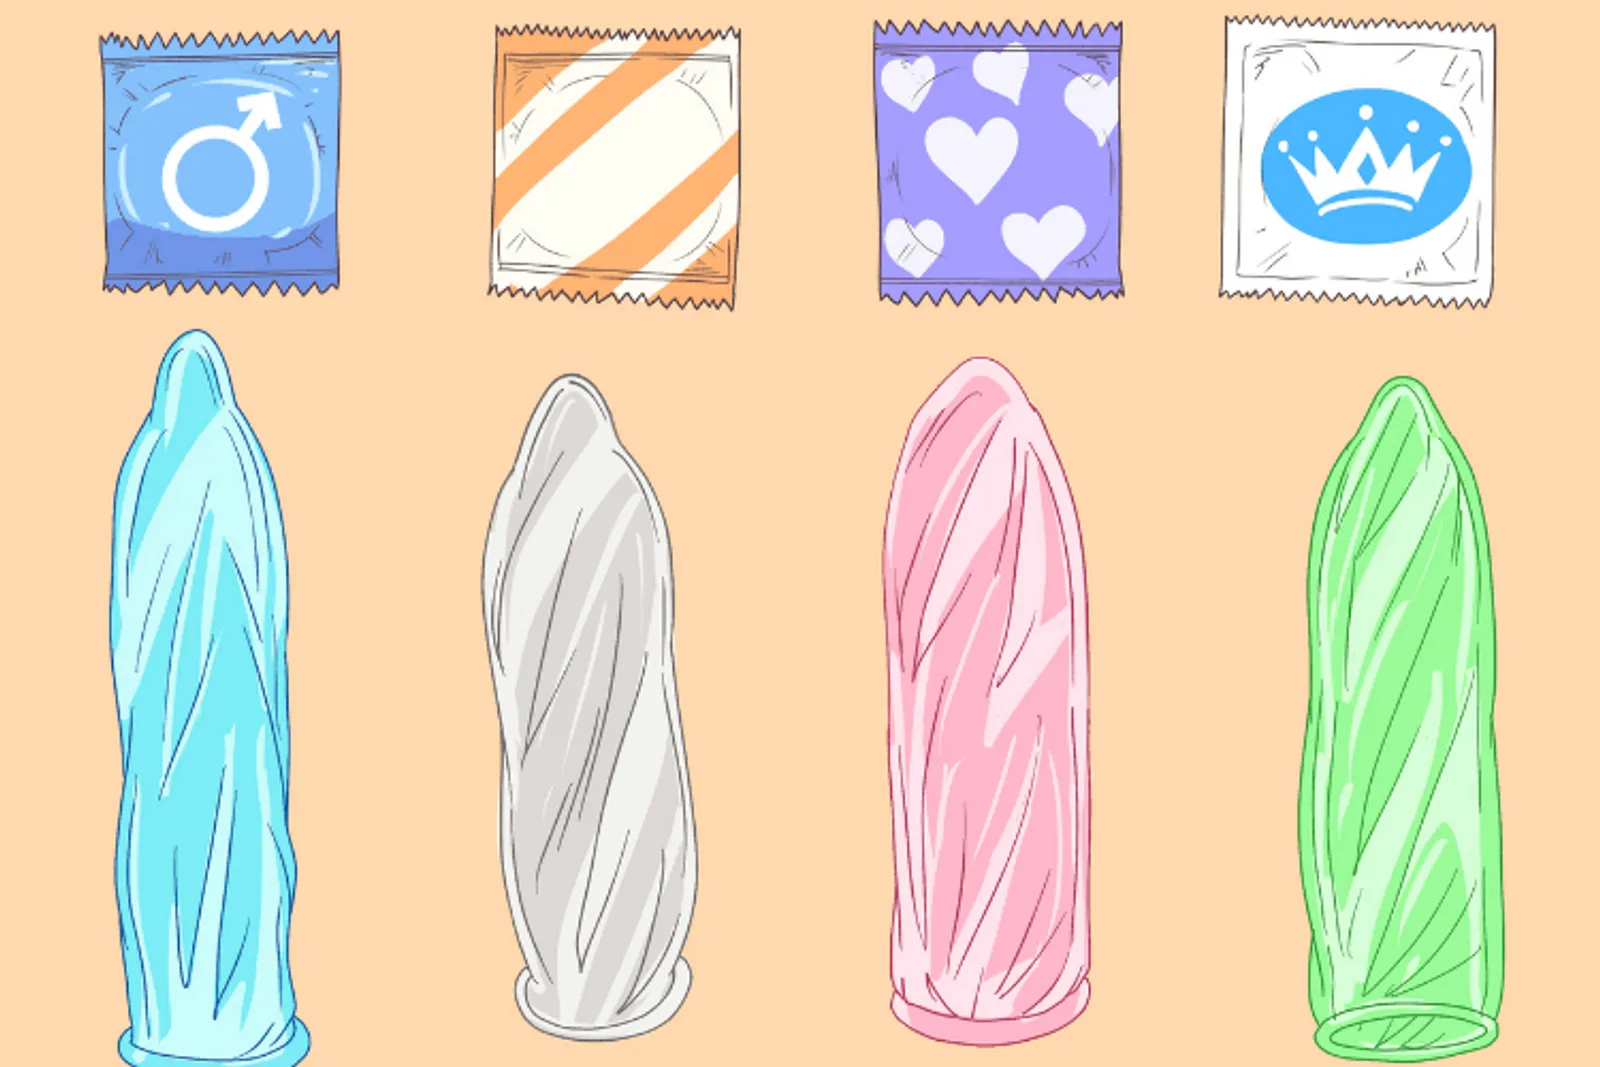 Ketahui Ukuran Kondom dan Cara Memilih yang Pas